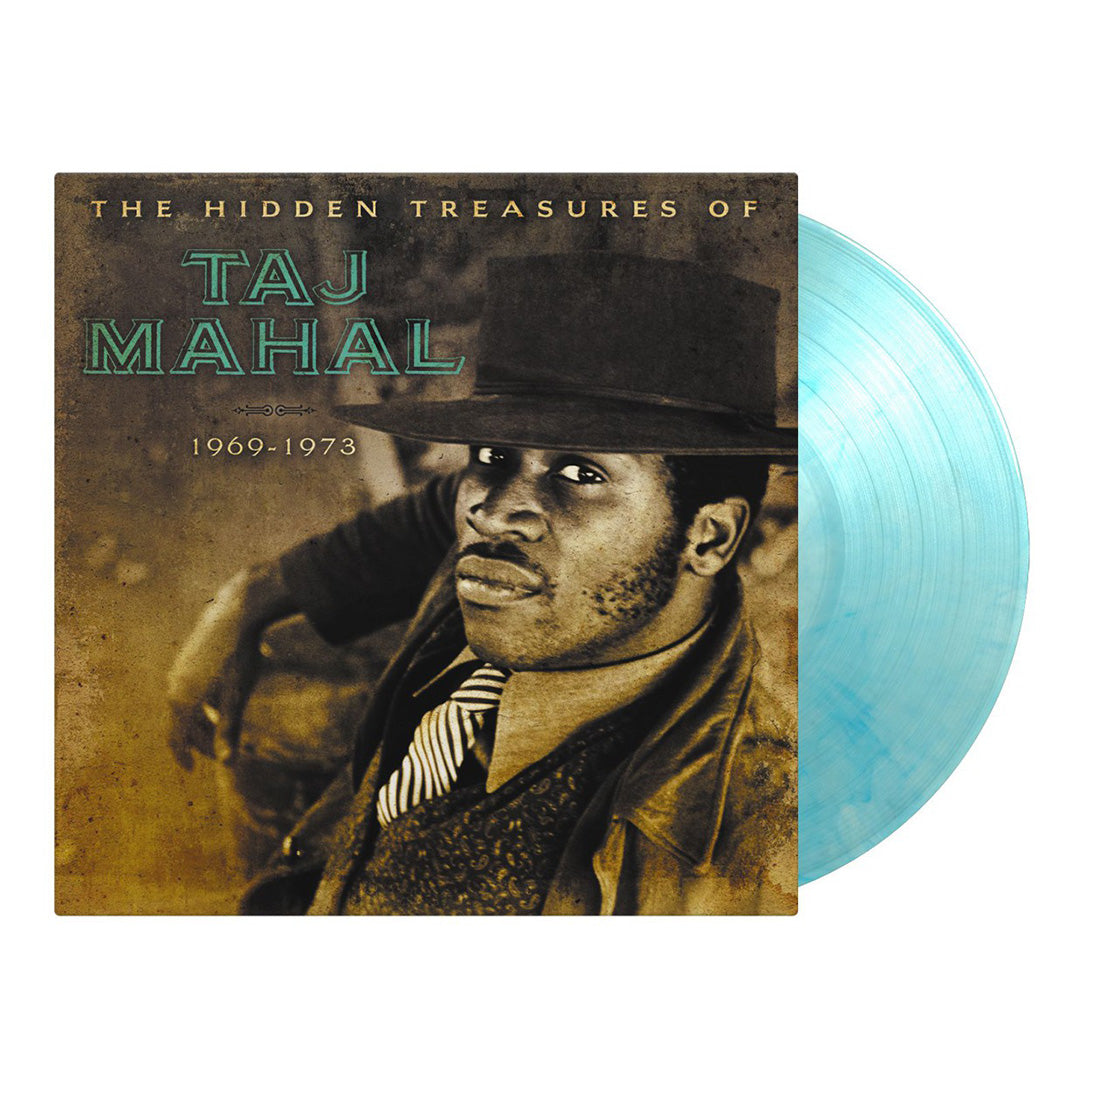 Taj Mahal - The Hidden Treasures Of Taj Mahal (1969-1973): Limited Crystal Clear & Blue Marbled Vinyl LP